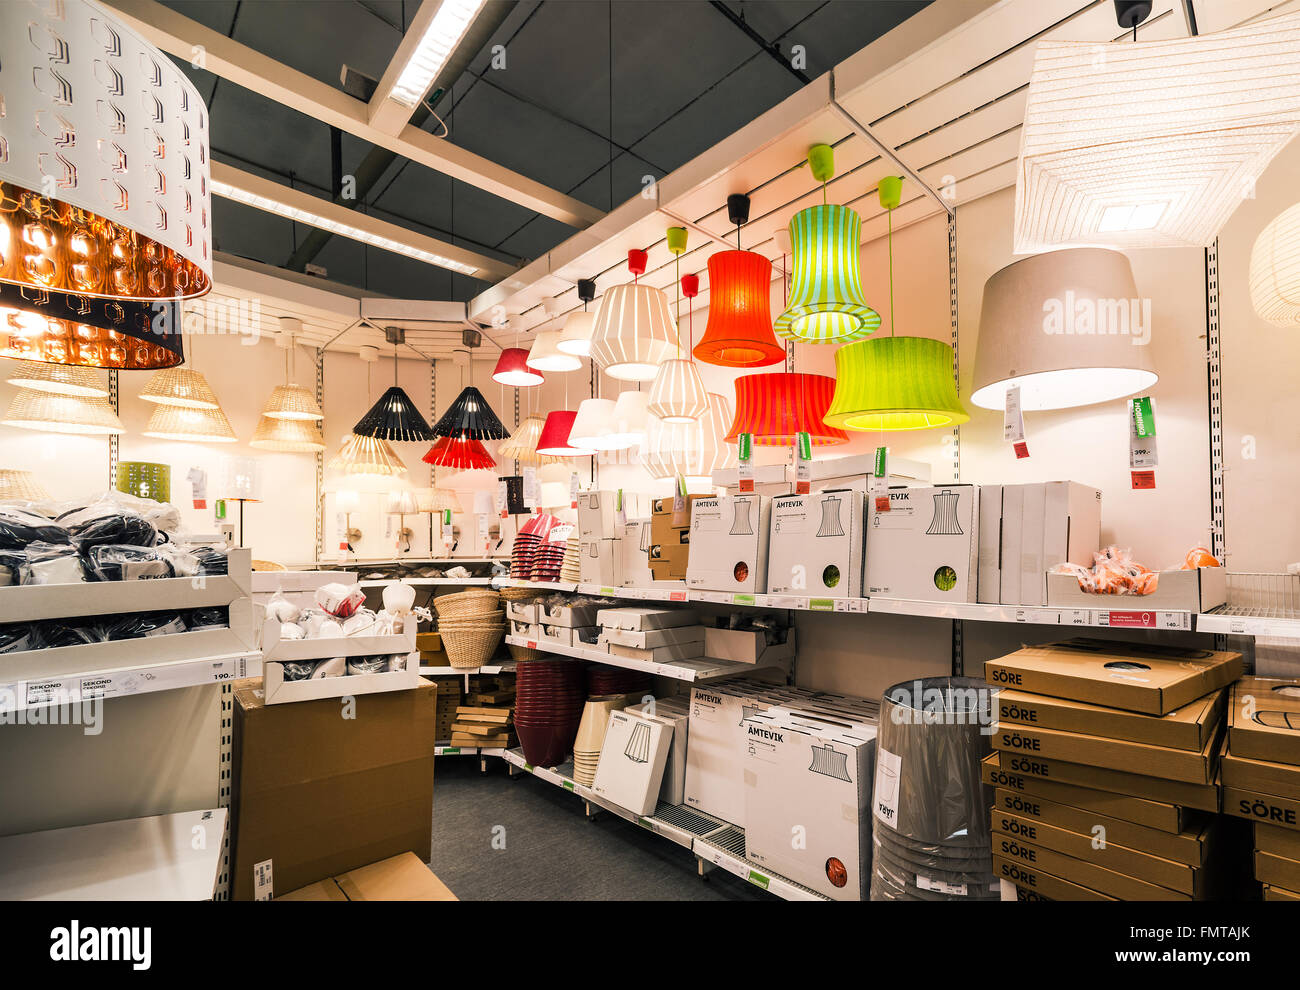 Ikea lamps -Fotos und -Bildmaterial in hoher Auflösung – Alamy